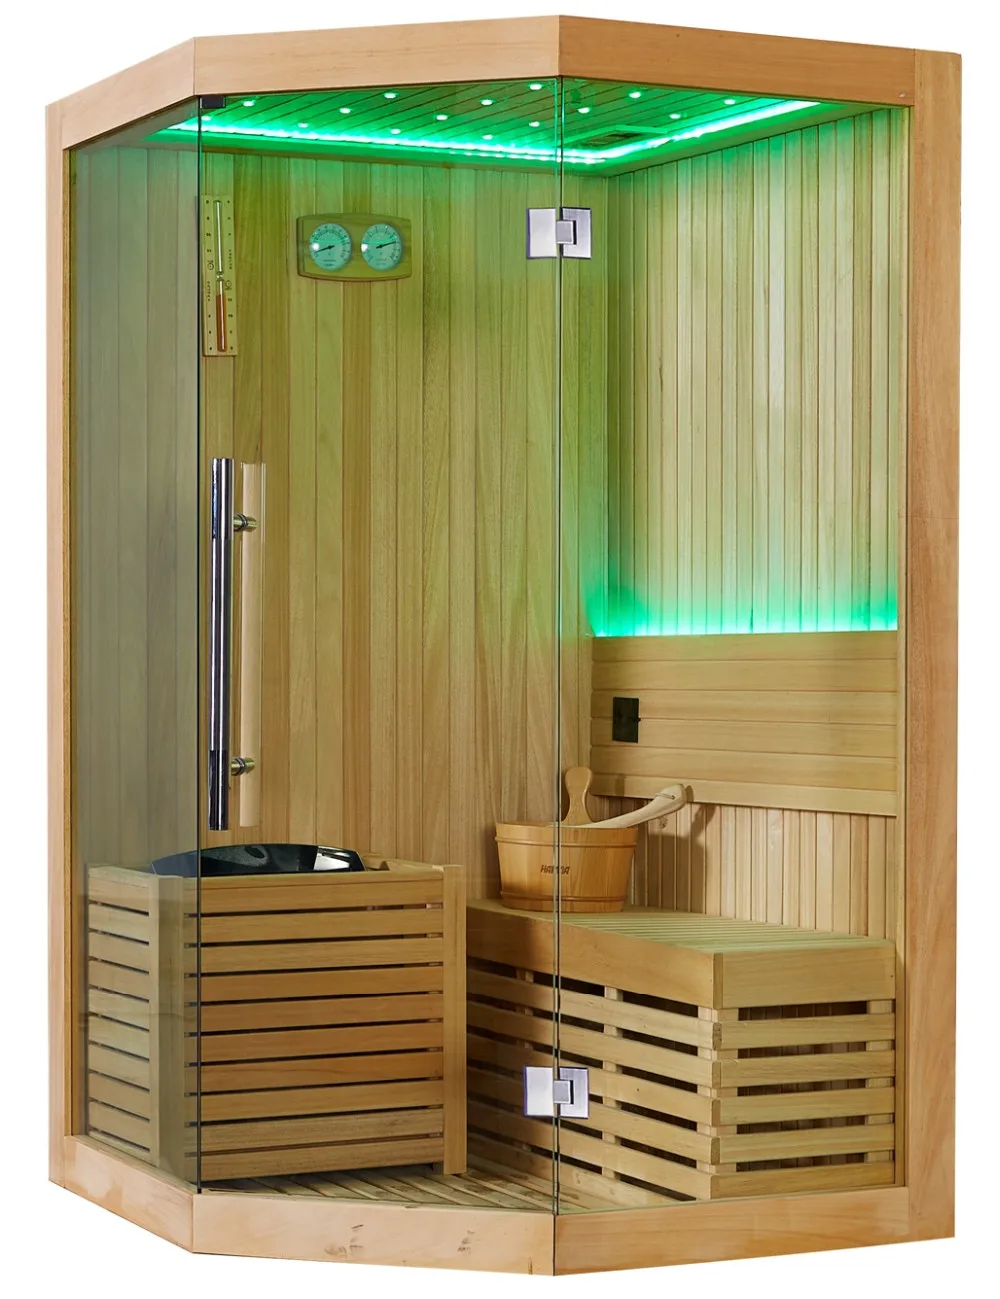 Steam room or dry sauna фото 113